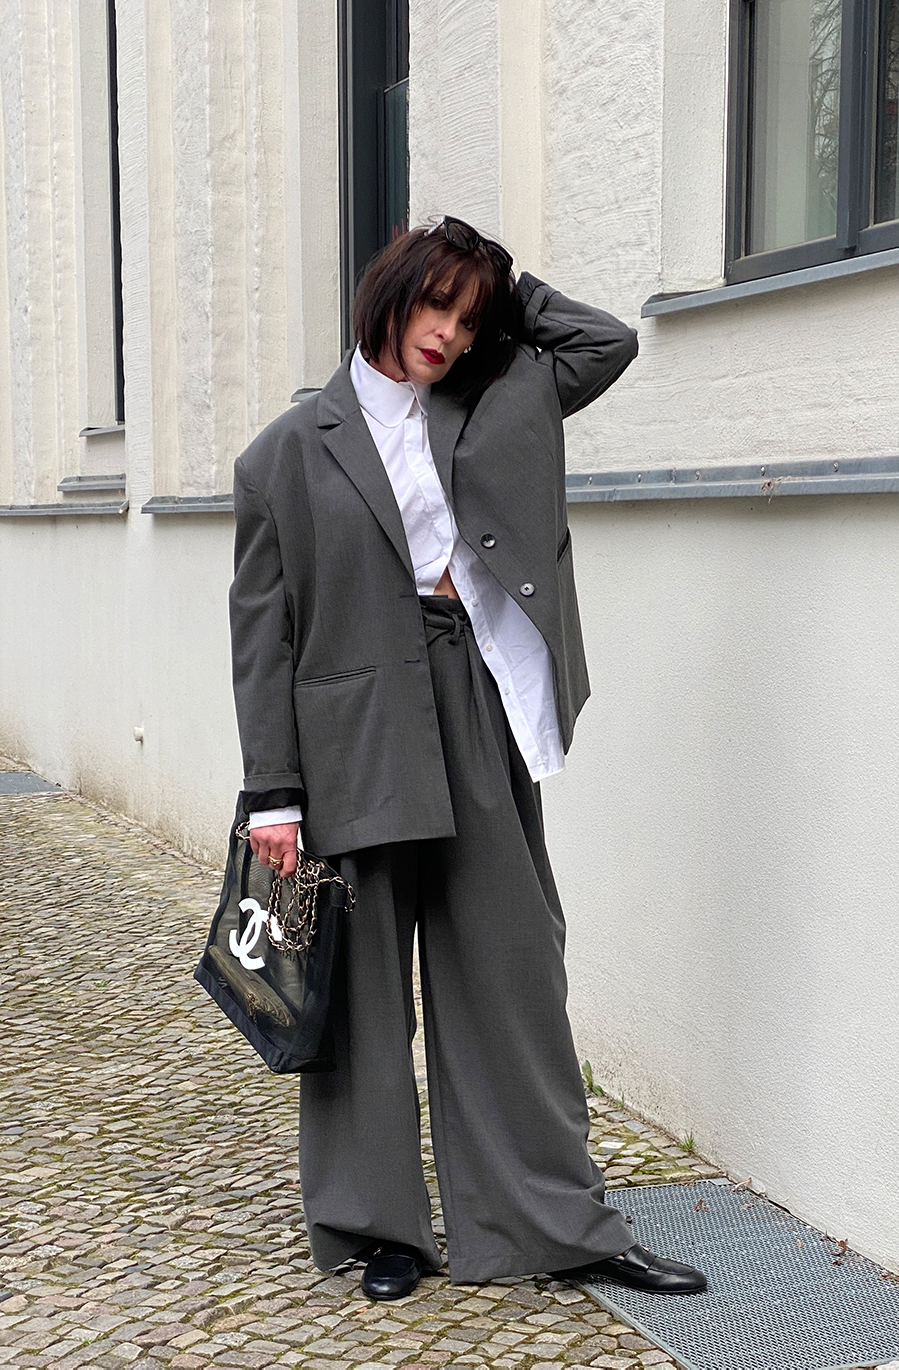 Just-take-a-look Berlin - Must-haves für den Sommer - Anzug - Chanel Loafers - Tasche 2